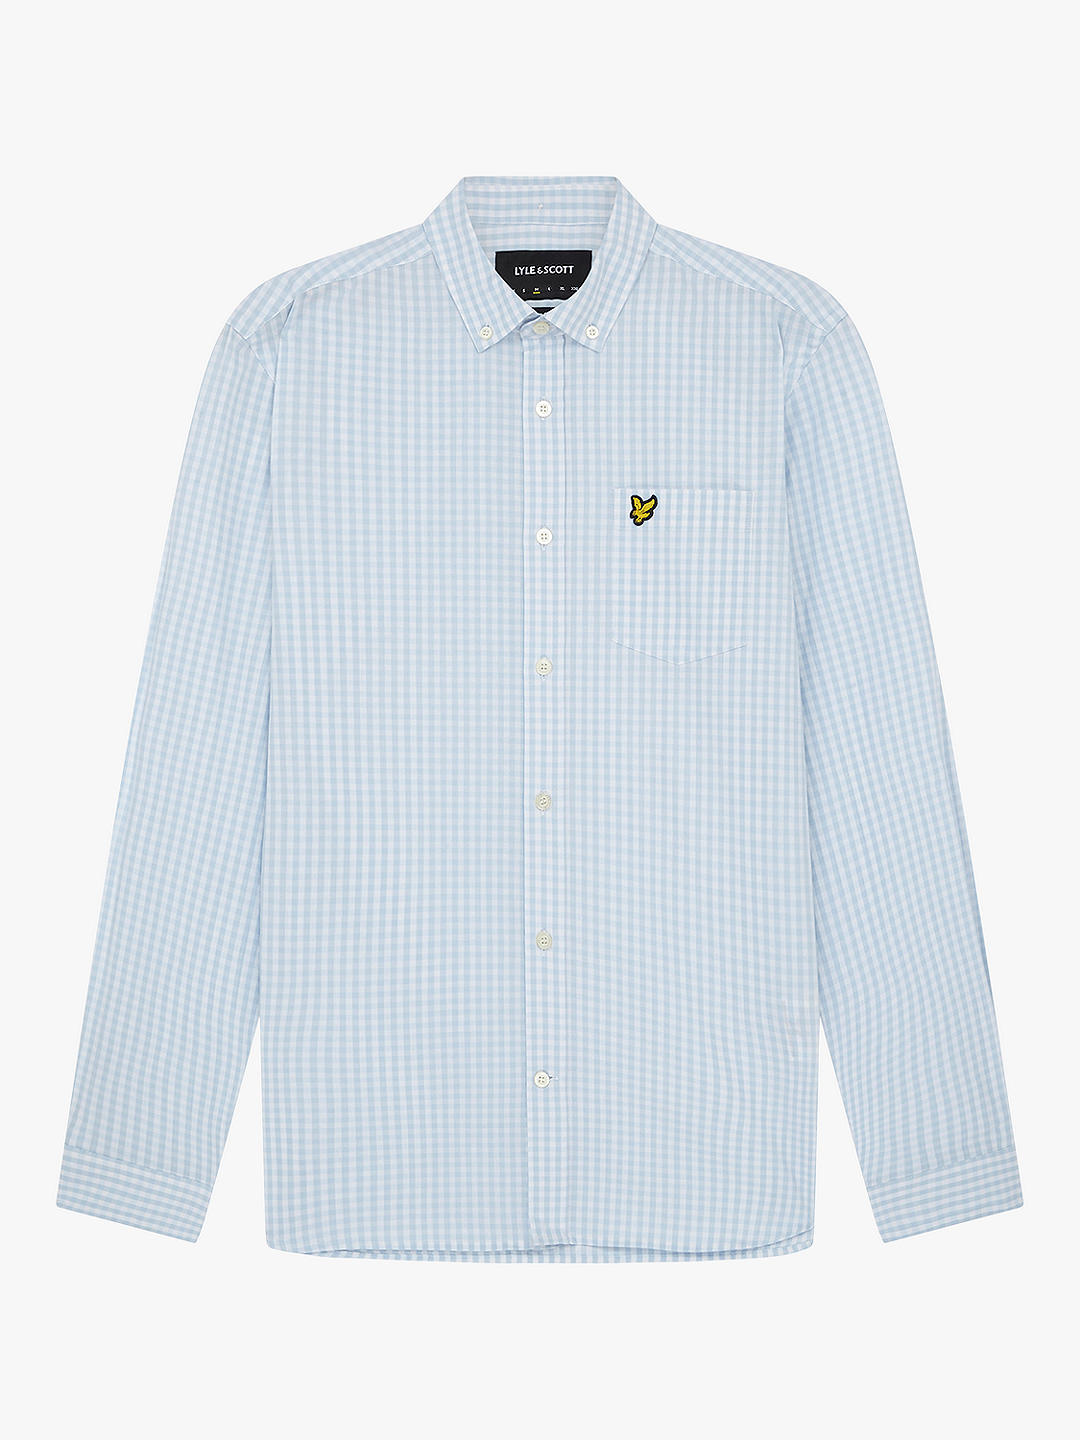 Lyle & Scott Long Sleeve Slim Fit Gingham Shirt, Blue/White